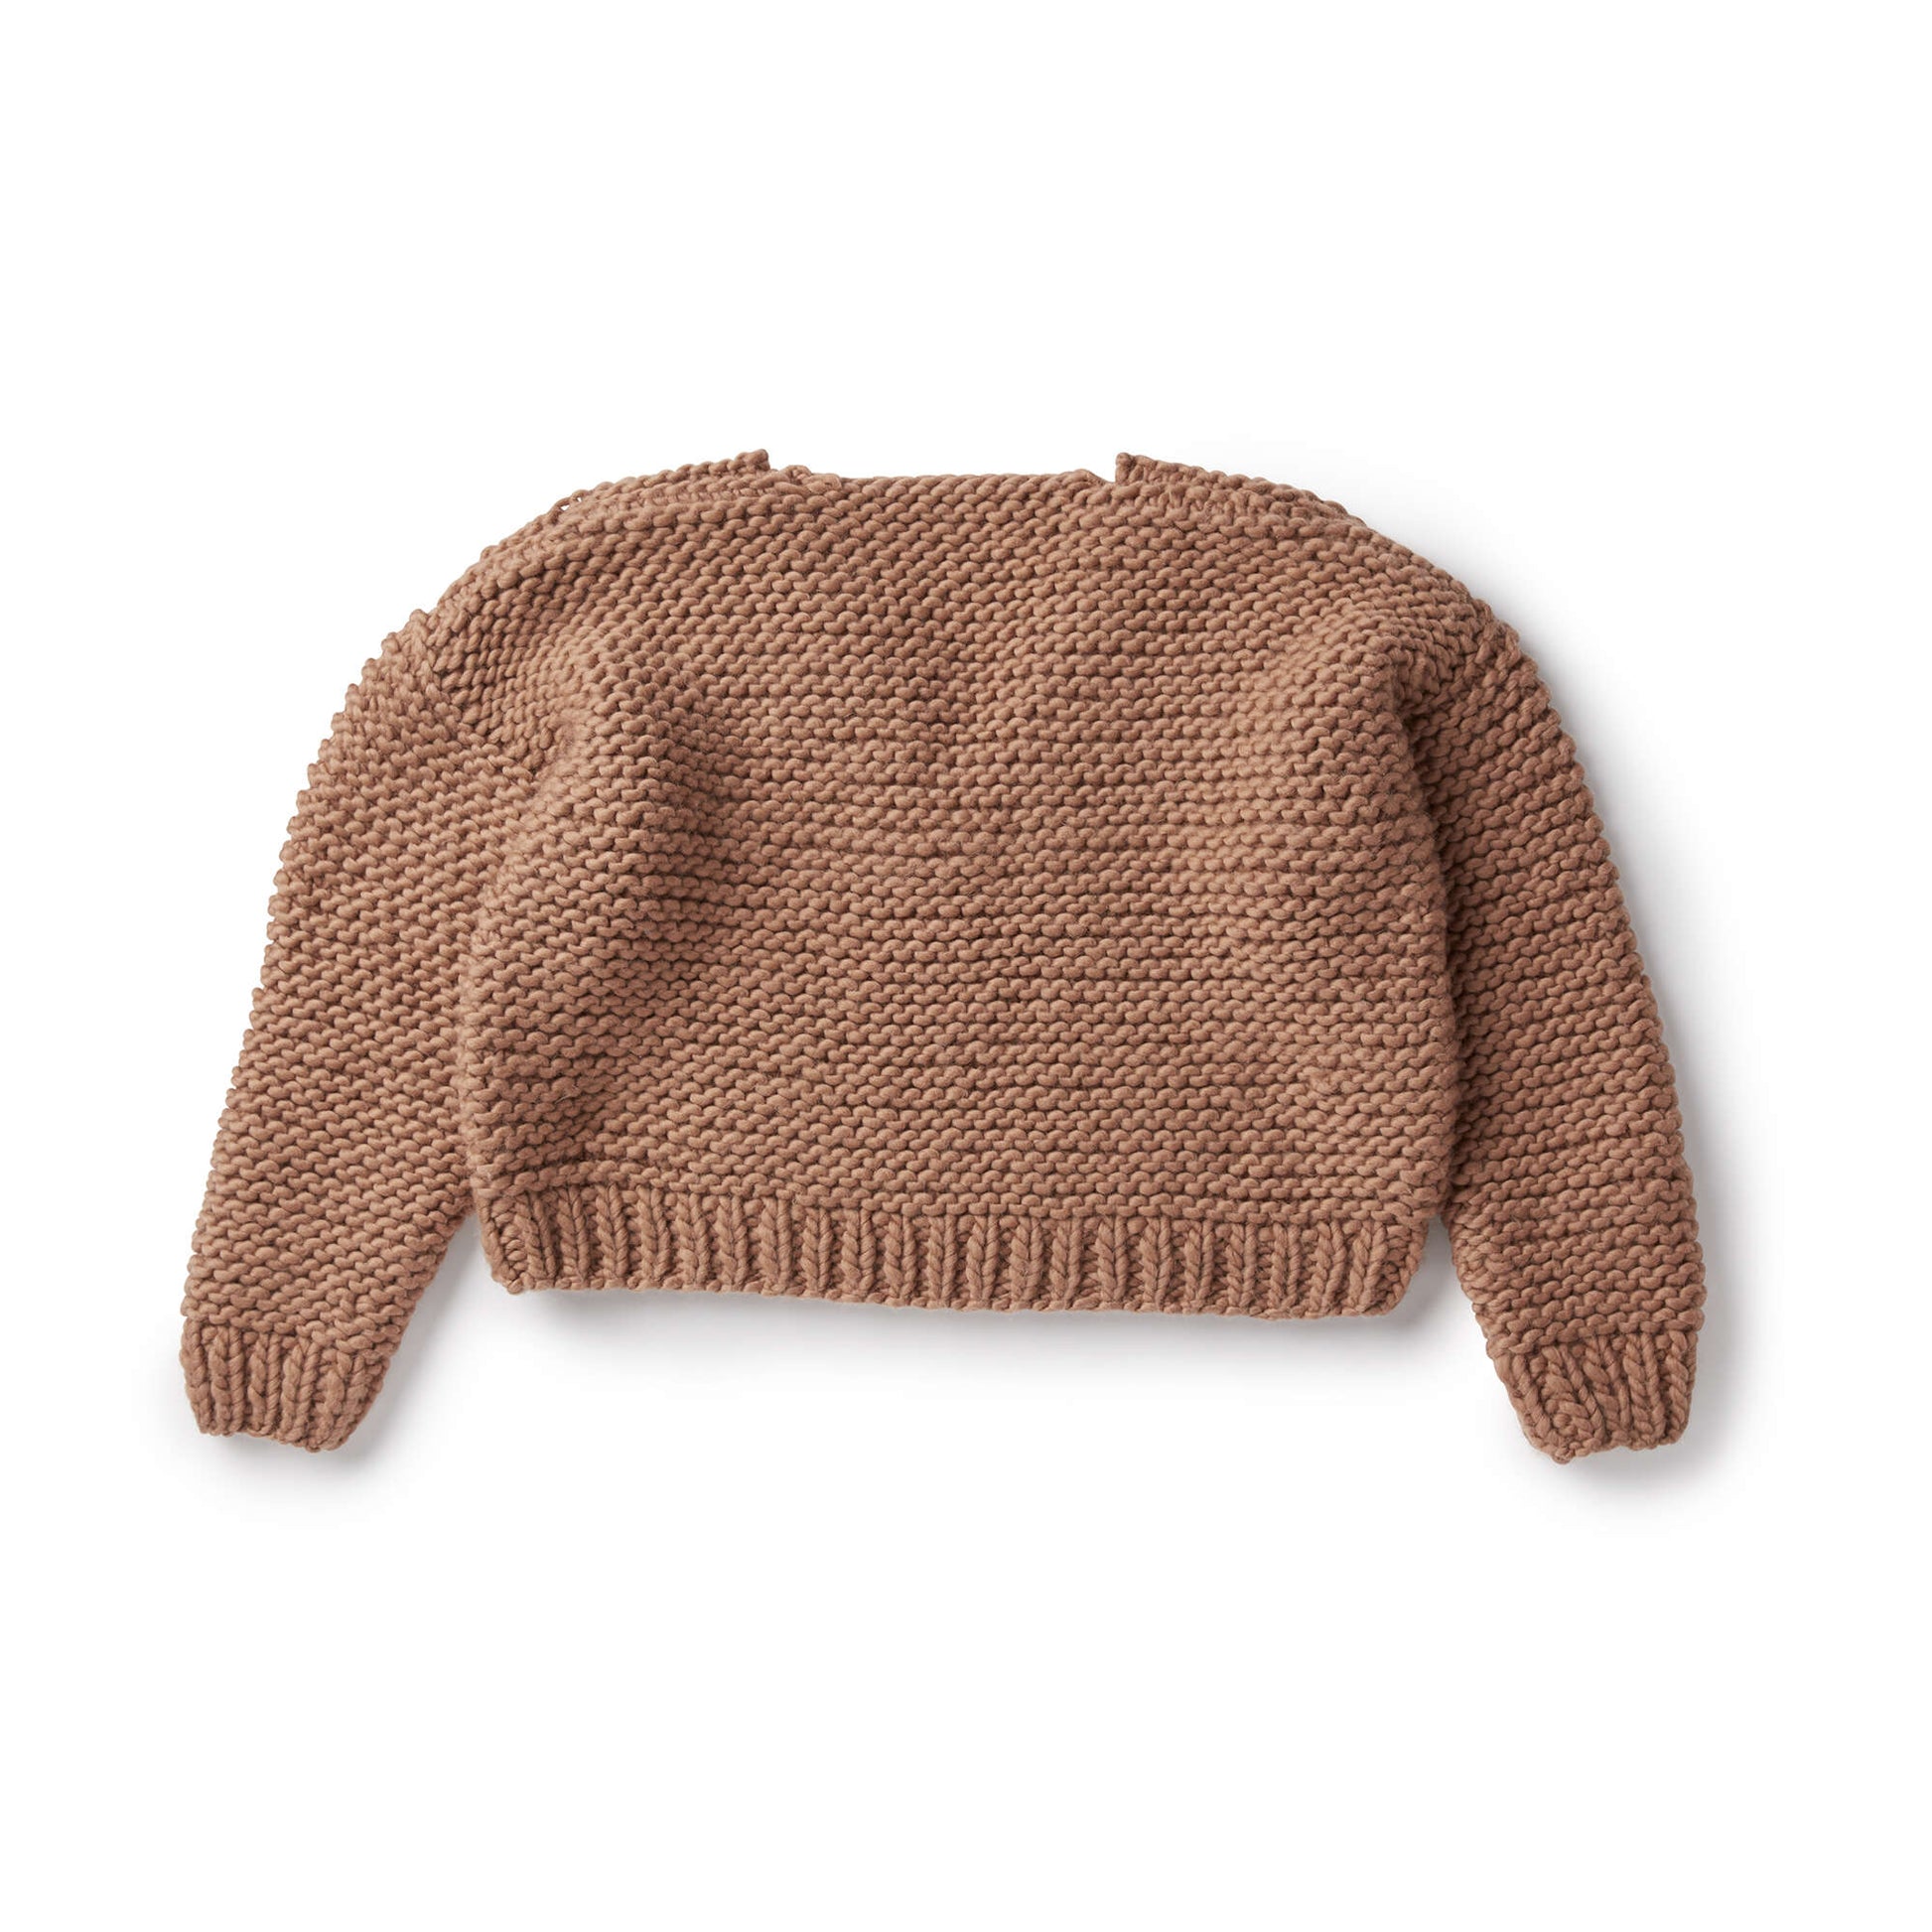 Sugar Bush Knit Copper Cropper Pullover Knit Sweater made in Sugar Bush Chill yarn